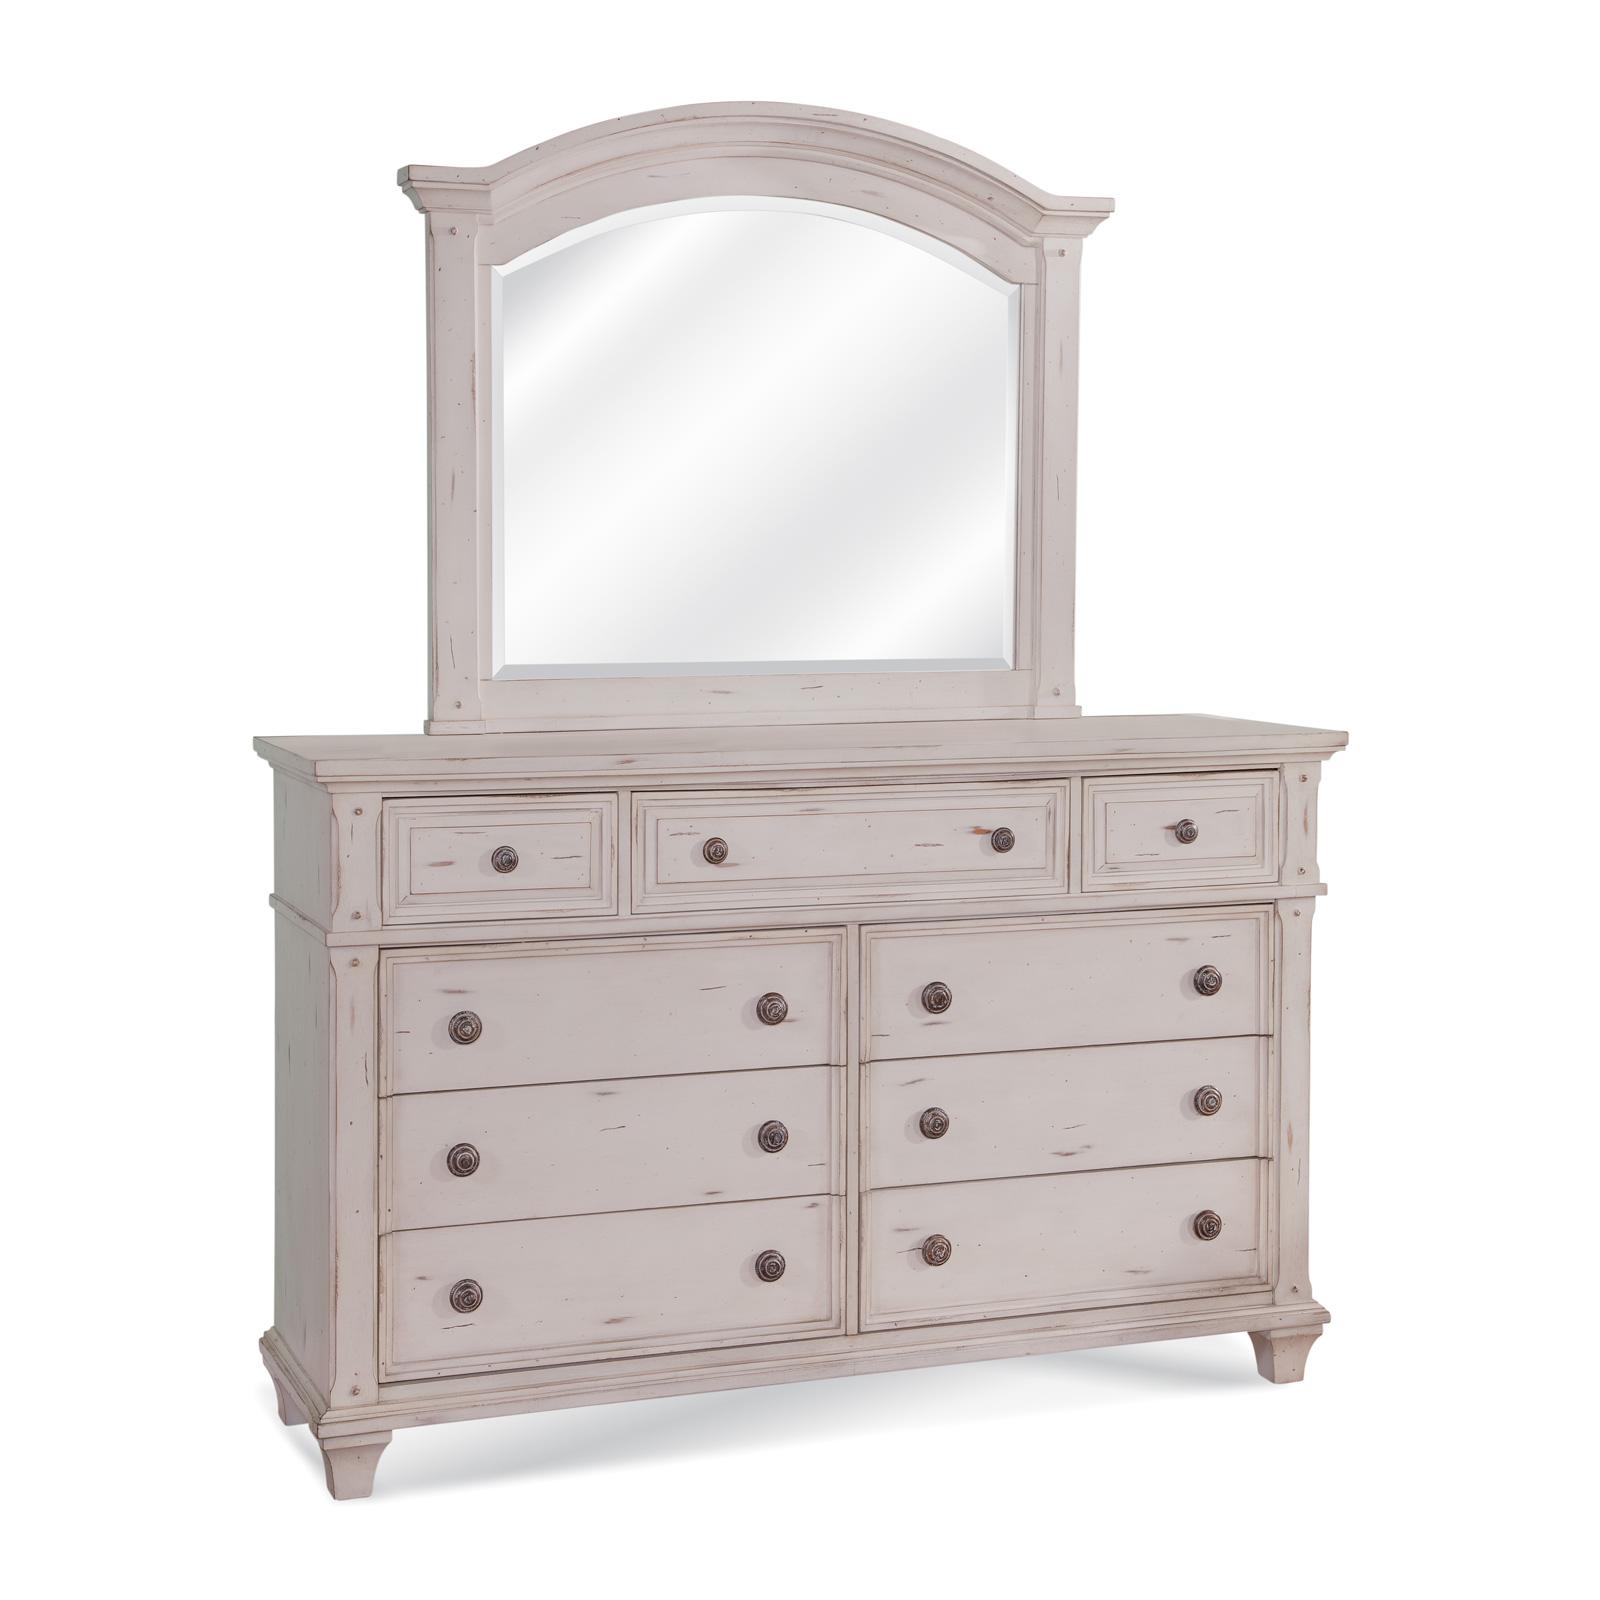 Classic, Traditional Dresser With Mirror SEDONA 2410-DLM 2410-DLM in Cobblestone, White 